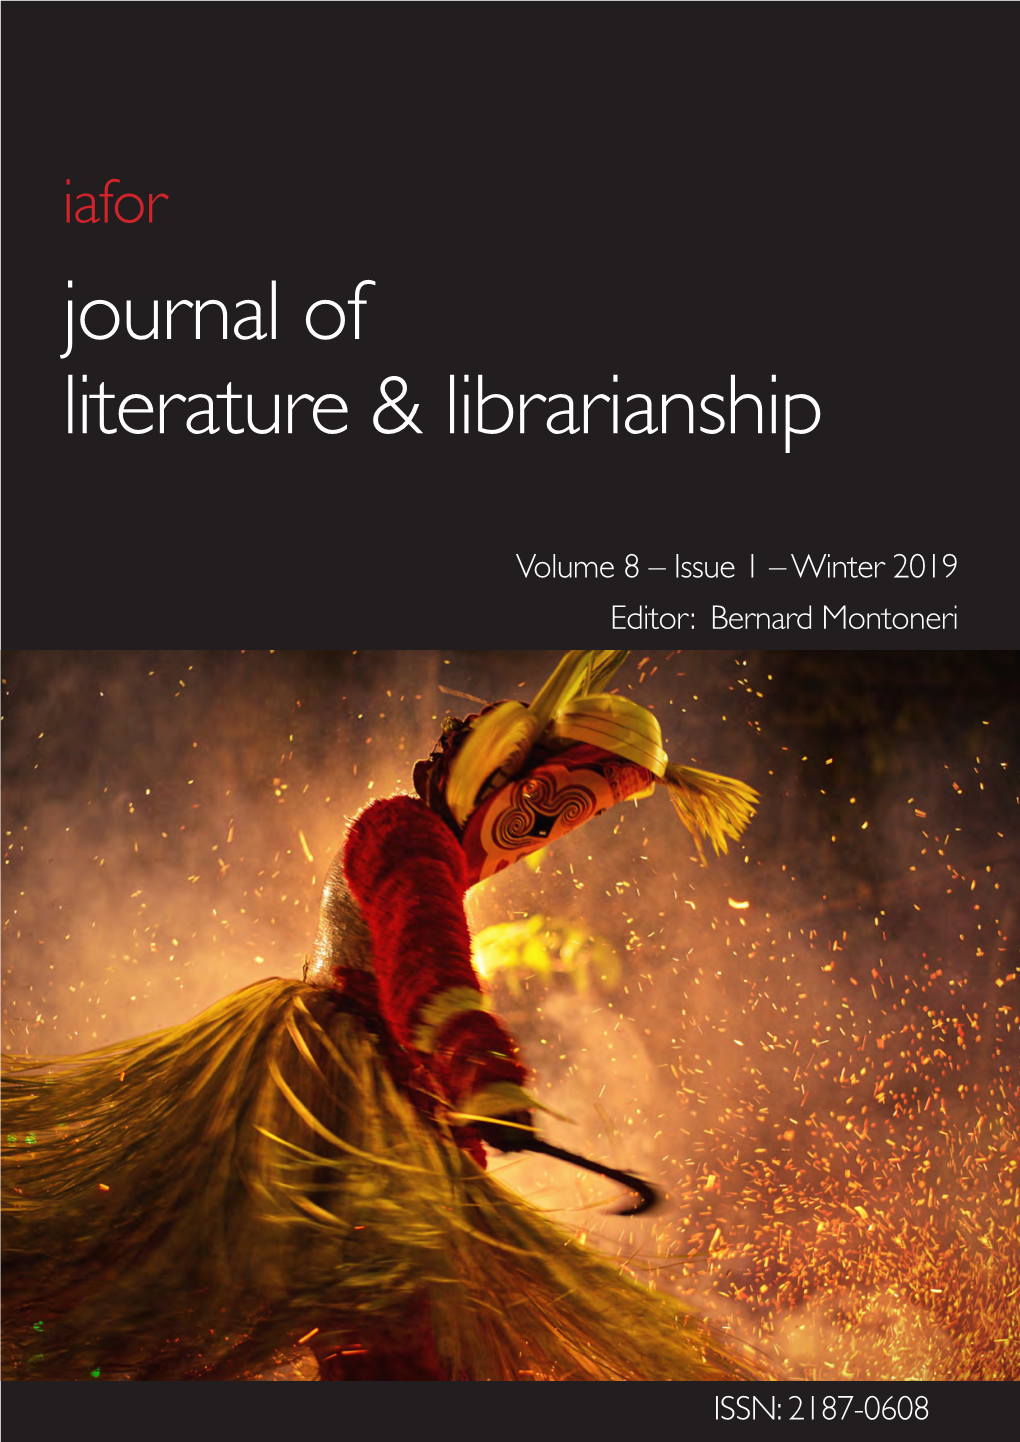 IAFOR Journal of Literature & Librarianship